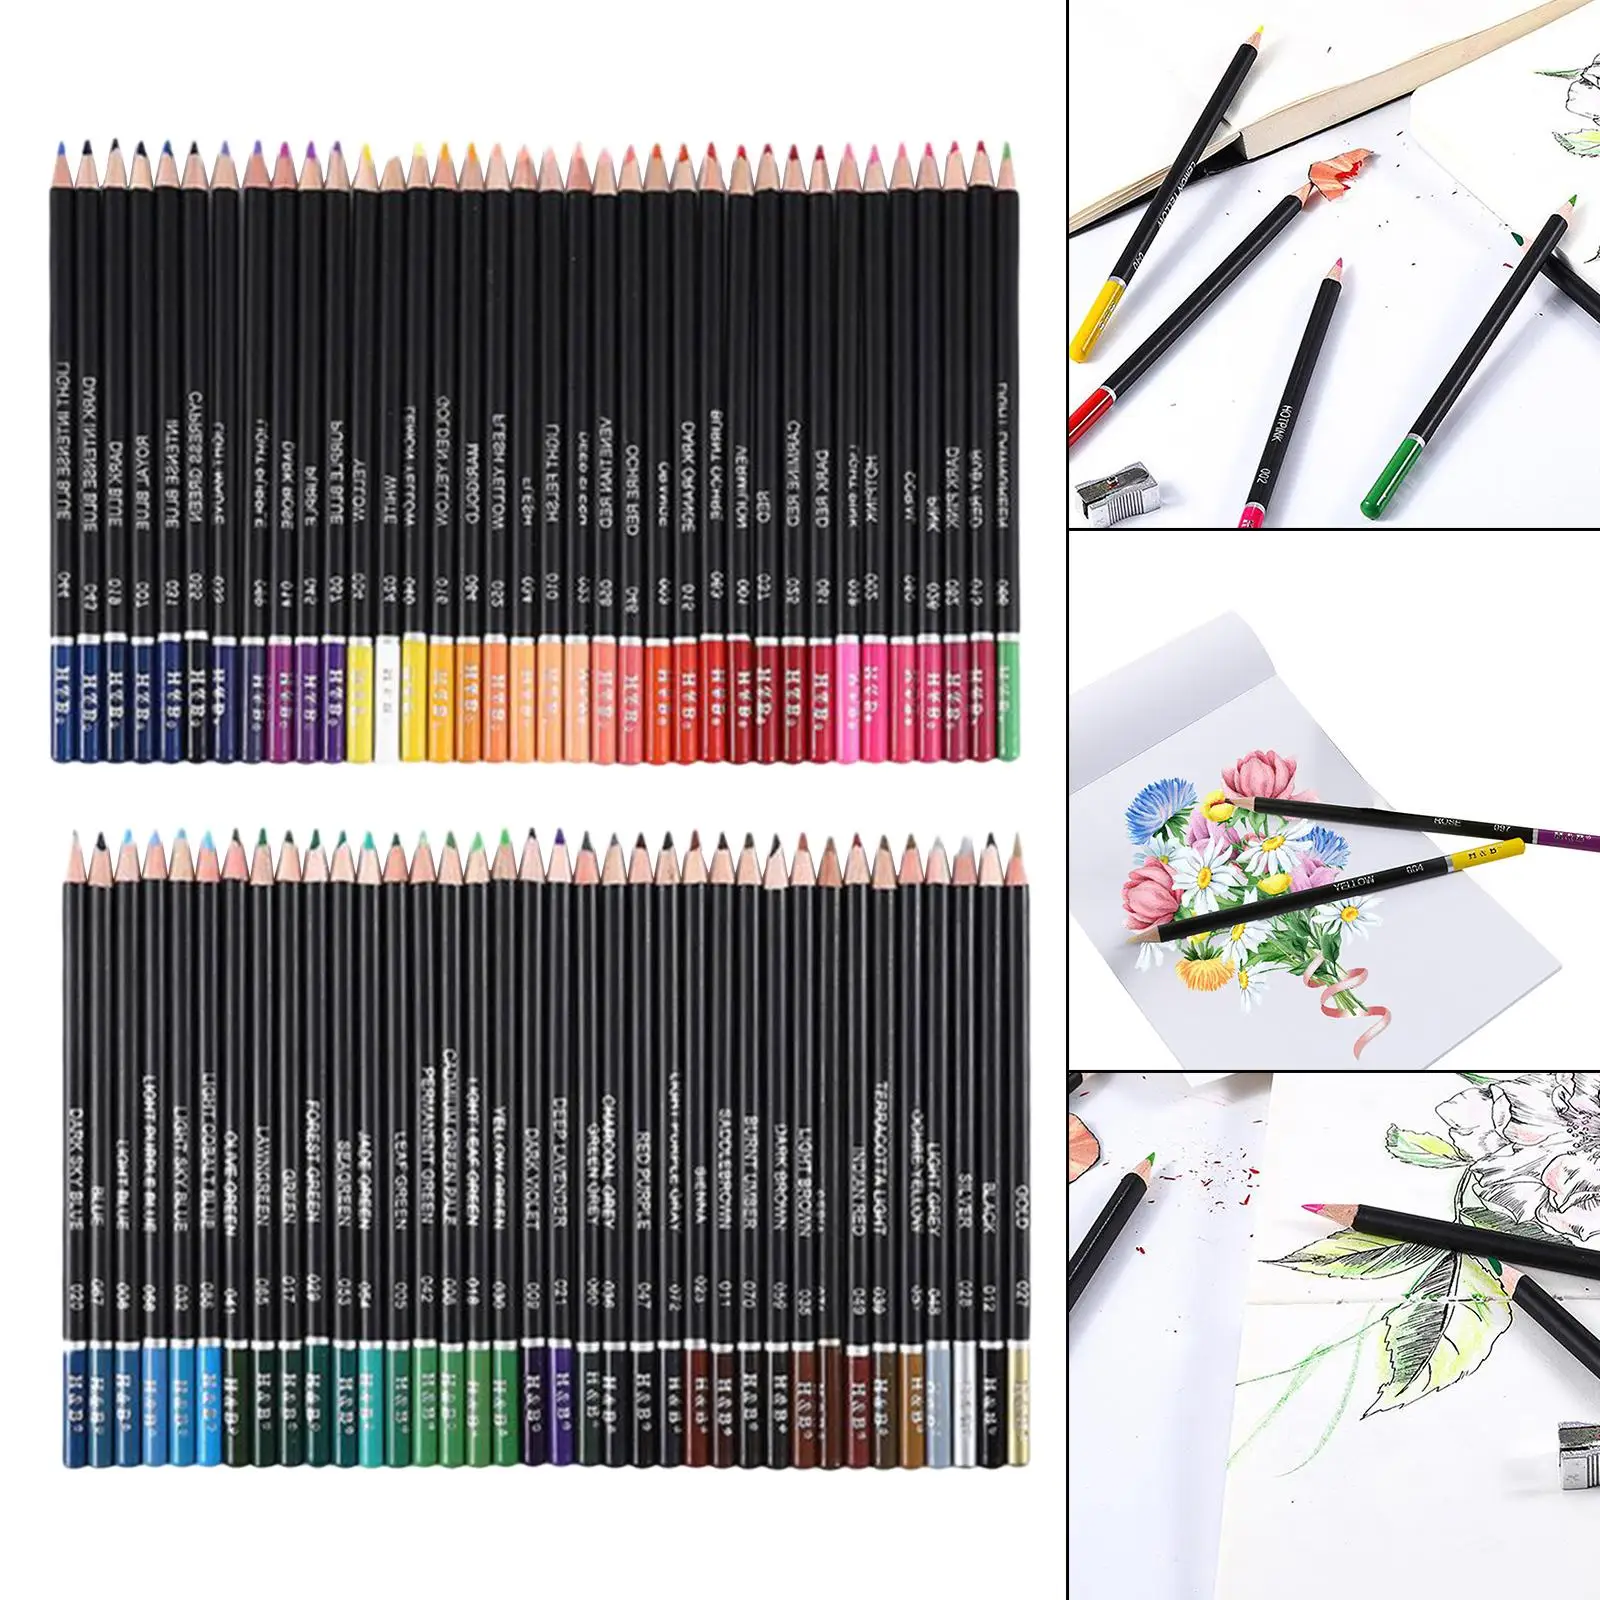 72 Oil Based Colored Pencils Crafting Sketch Sketching Sketchbook